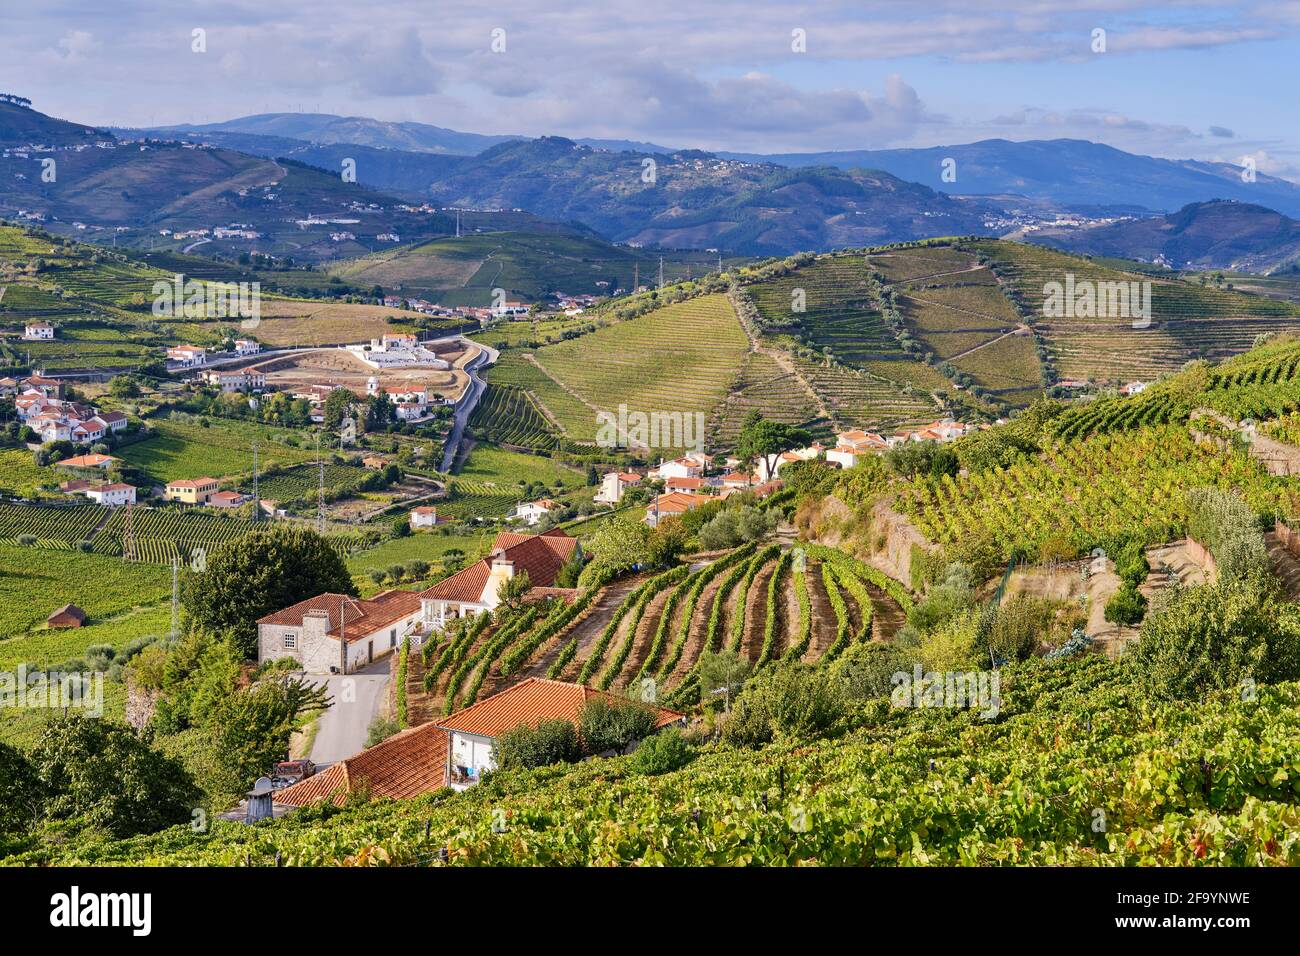 The terraced vineyards at Sao Joao de Lobrigos, Alto Douro, a Unesco World heritage site. Portugal Stock Photo